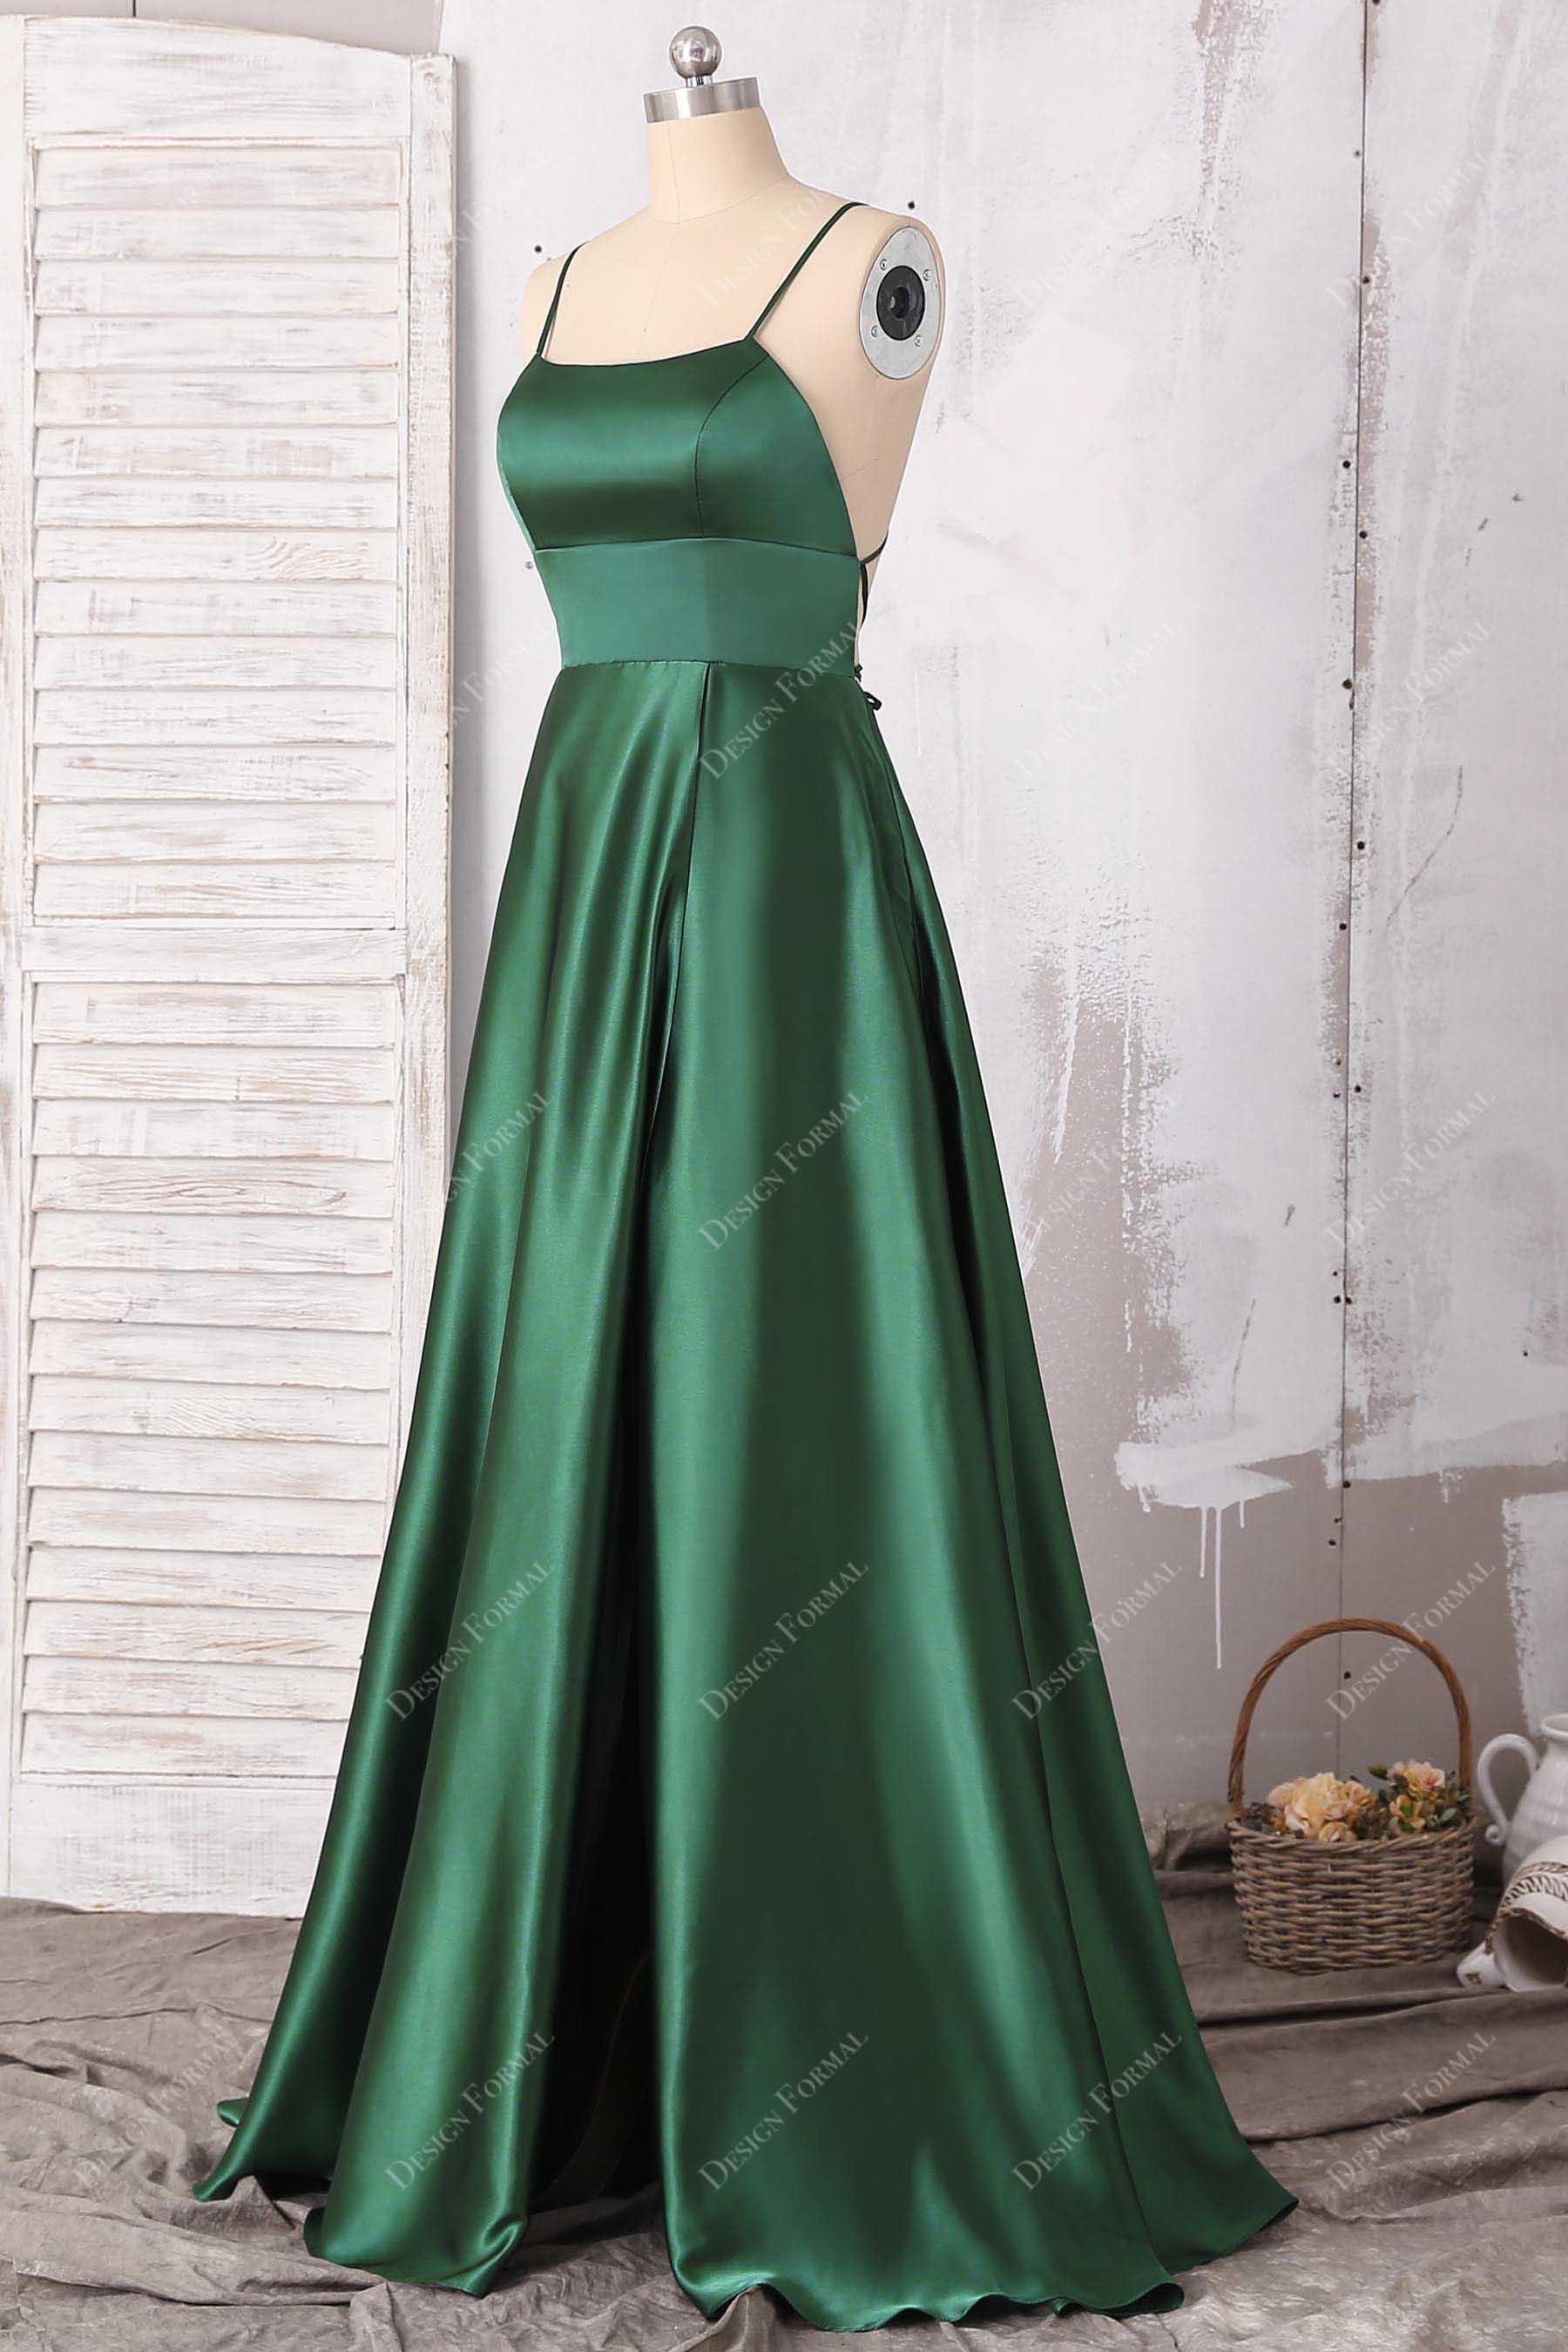 Buy Elegantic Dark Green Satin Dress (Large) at Amazon.in